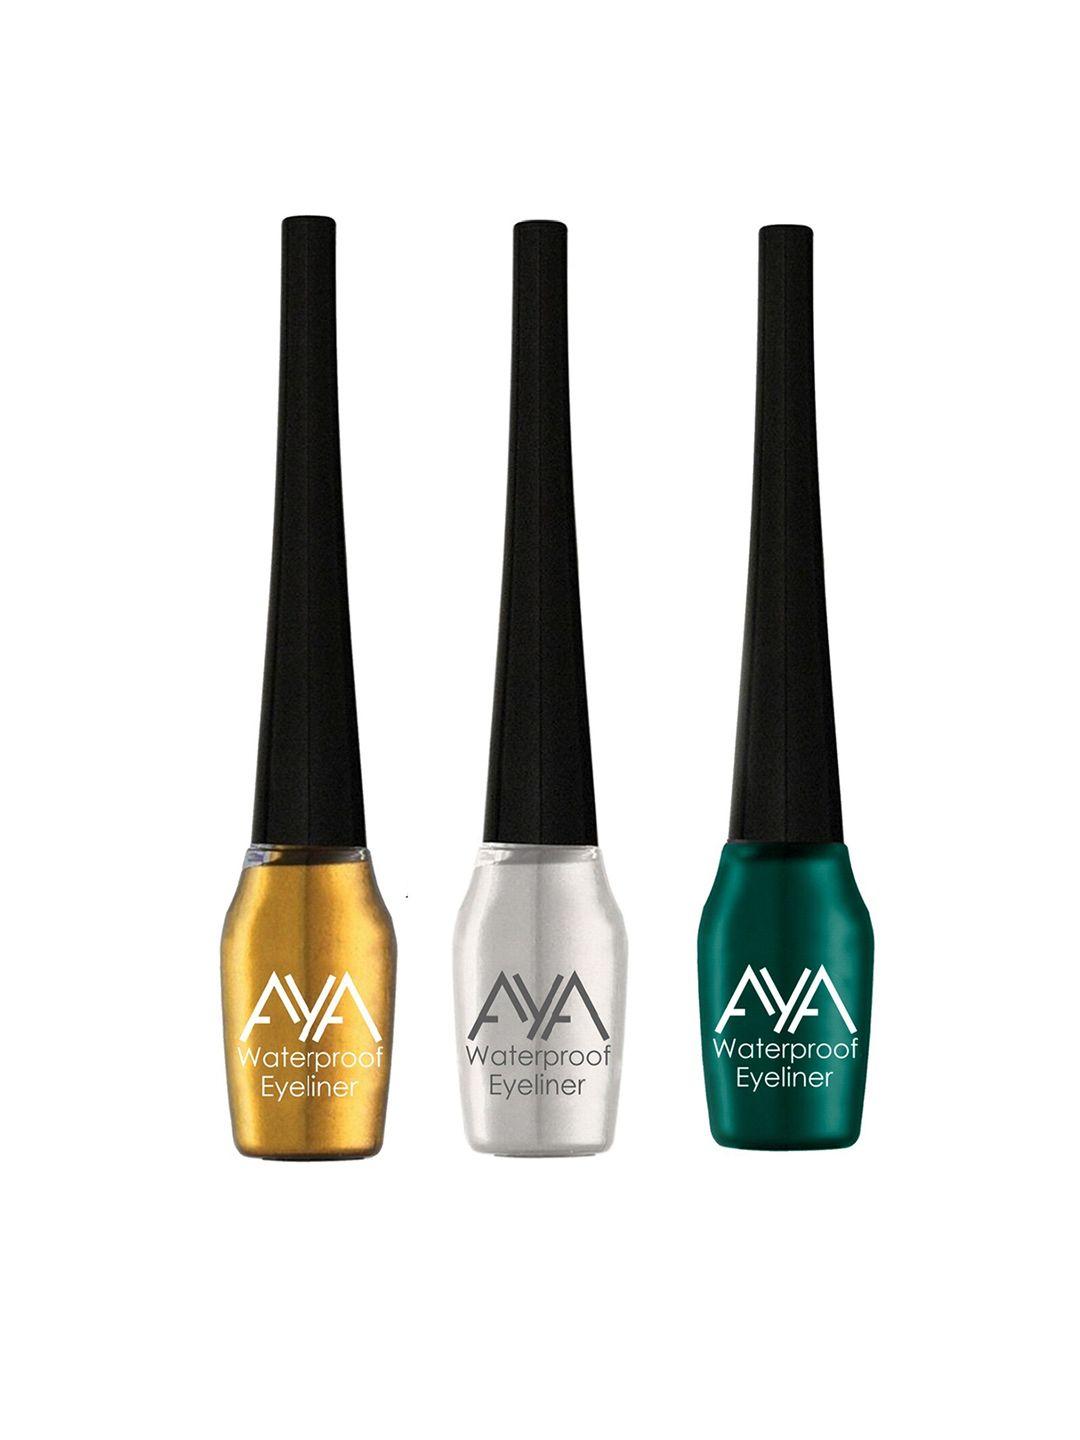 aya set of 3 waterproof eyeliner - silver, green & golden - 5 ml each